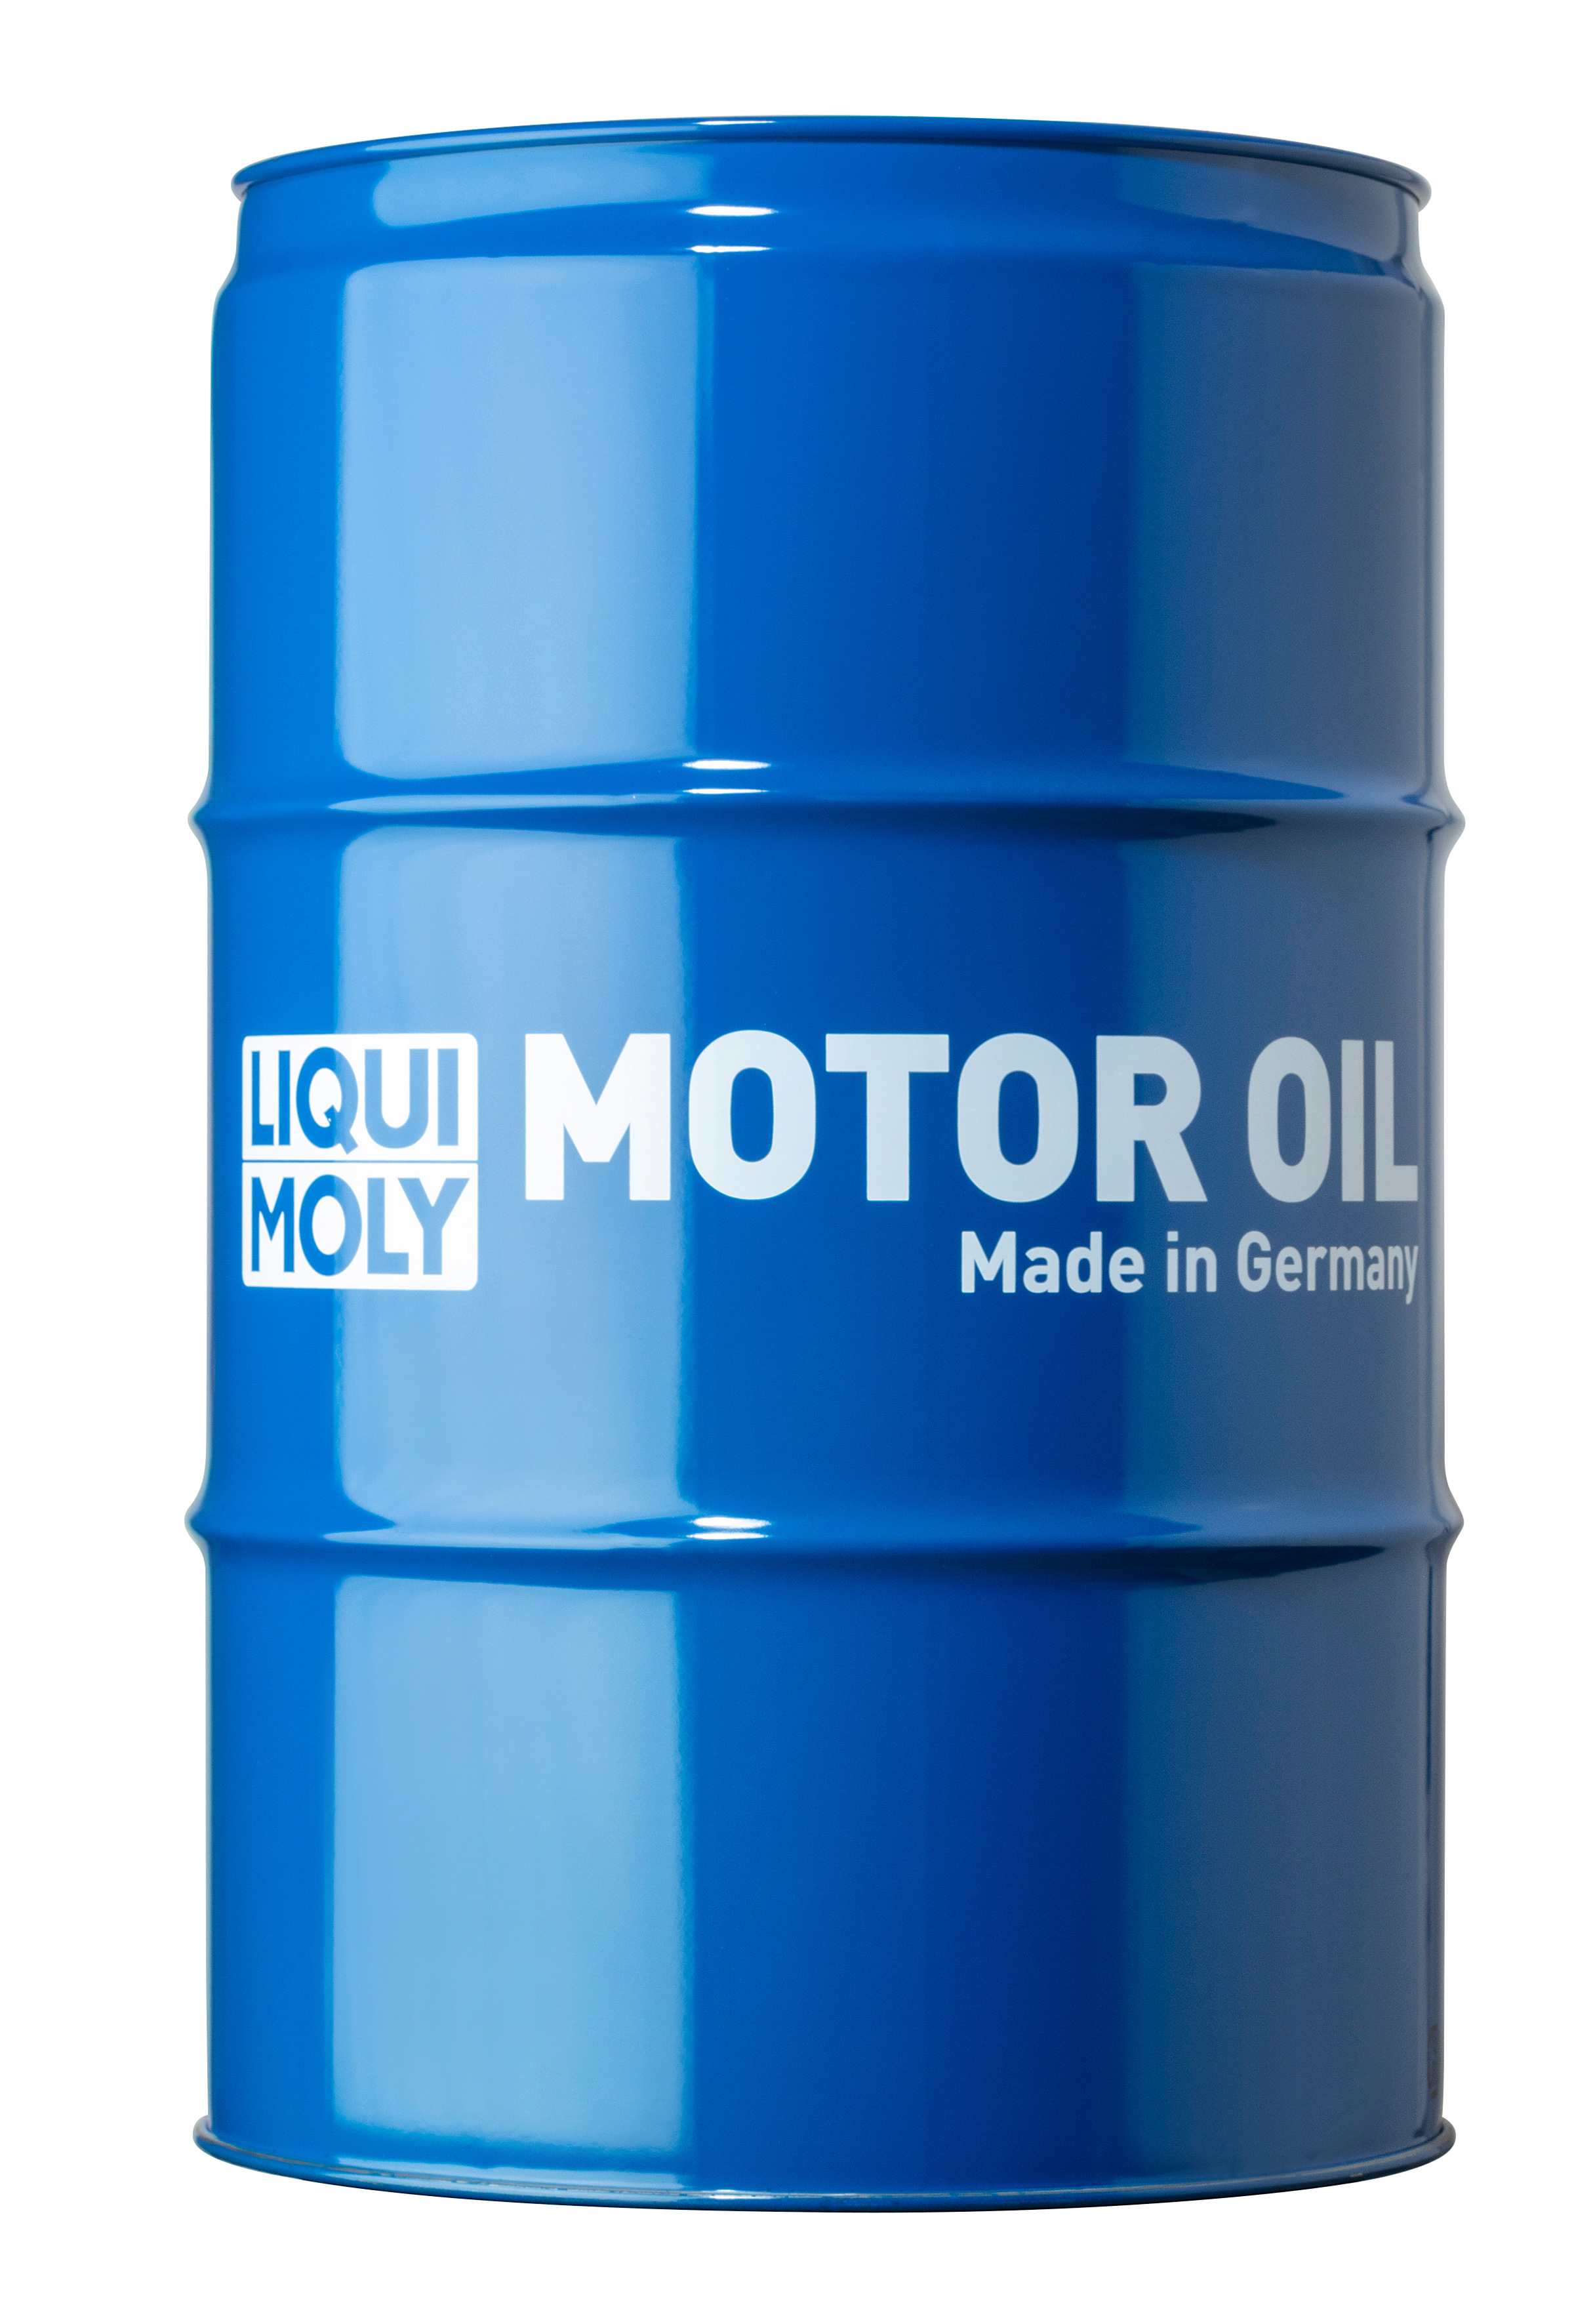 Liqui Moly Leichtlauf High Tech 5W40 Engine Oil (5 liter) - LM2332 -  75004695 - USP Motorsport